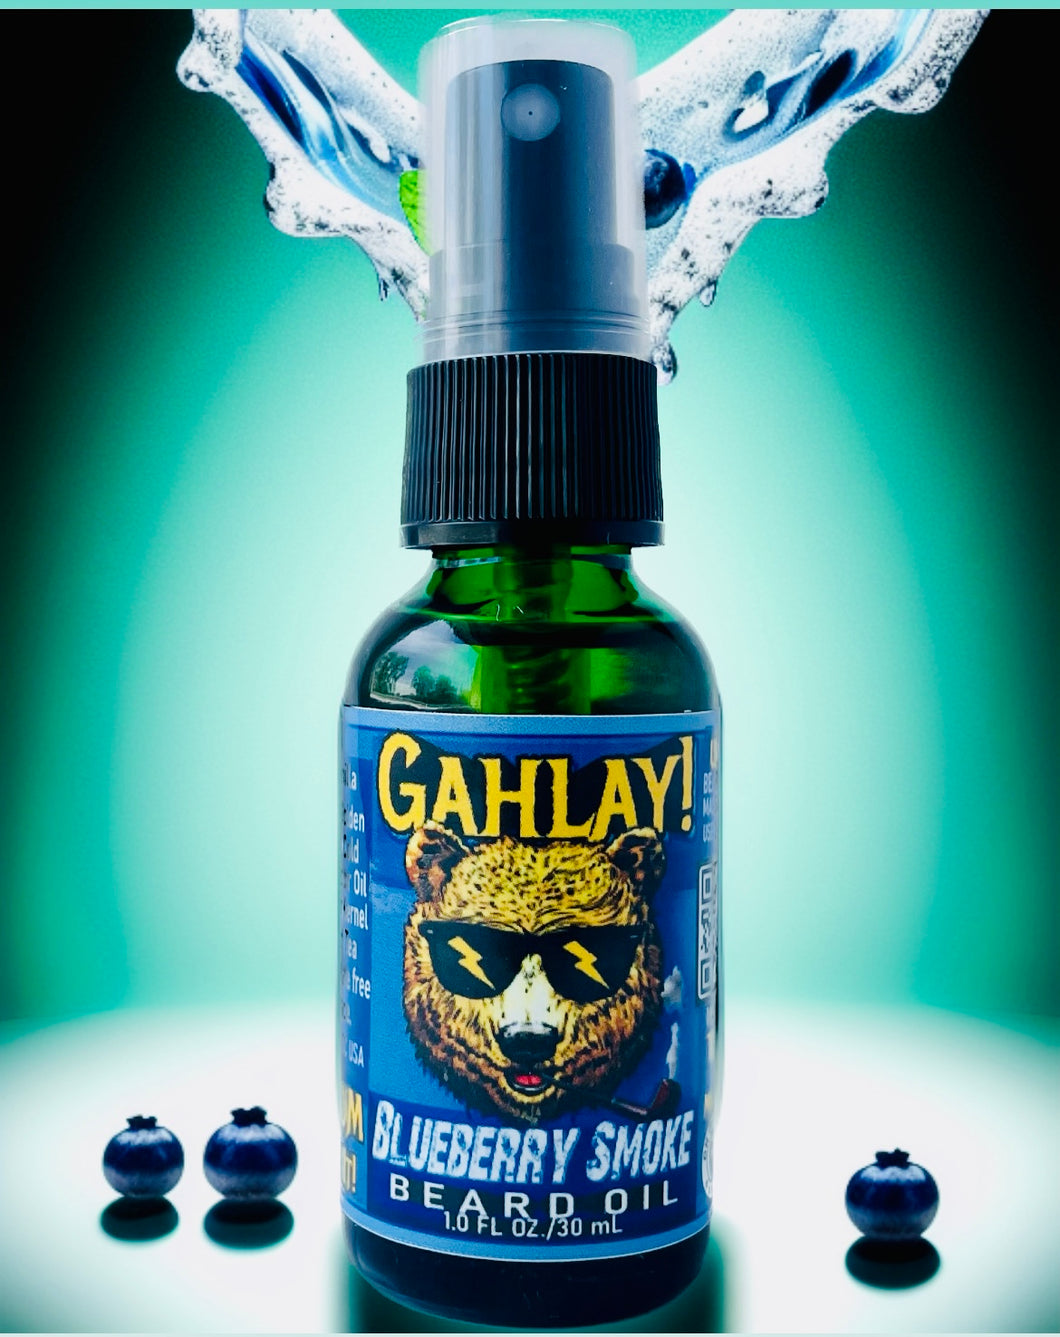 GAHLAY! Blueberry Smoke Beard Oil